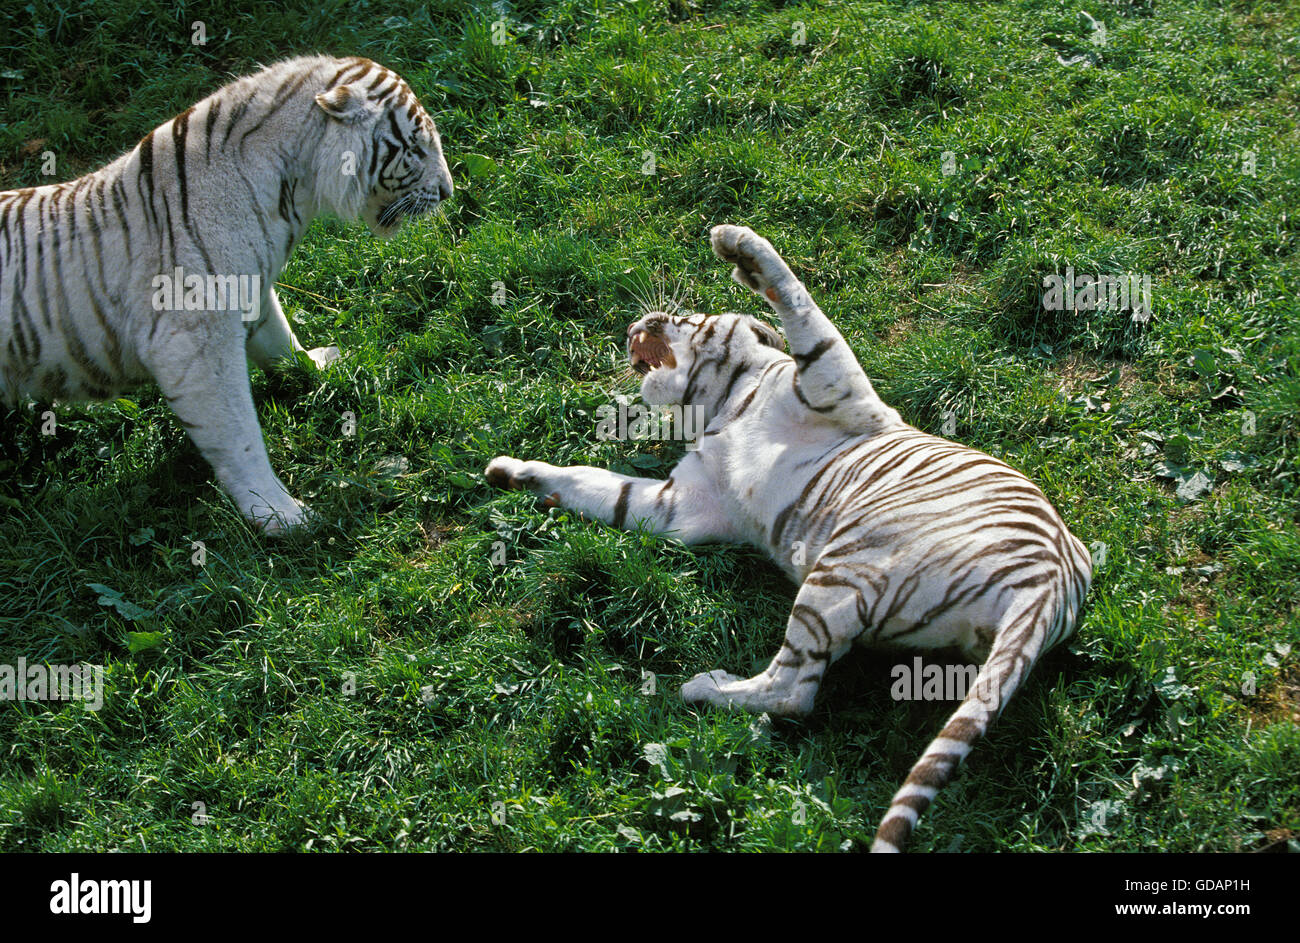 WHITE TIGER panthera tigris, COUPLE IN AGGRESSIVE POSTURE Stock Photo